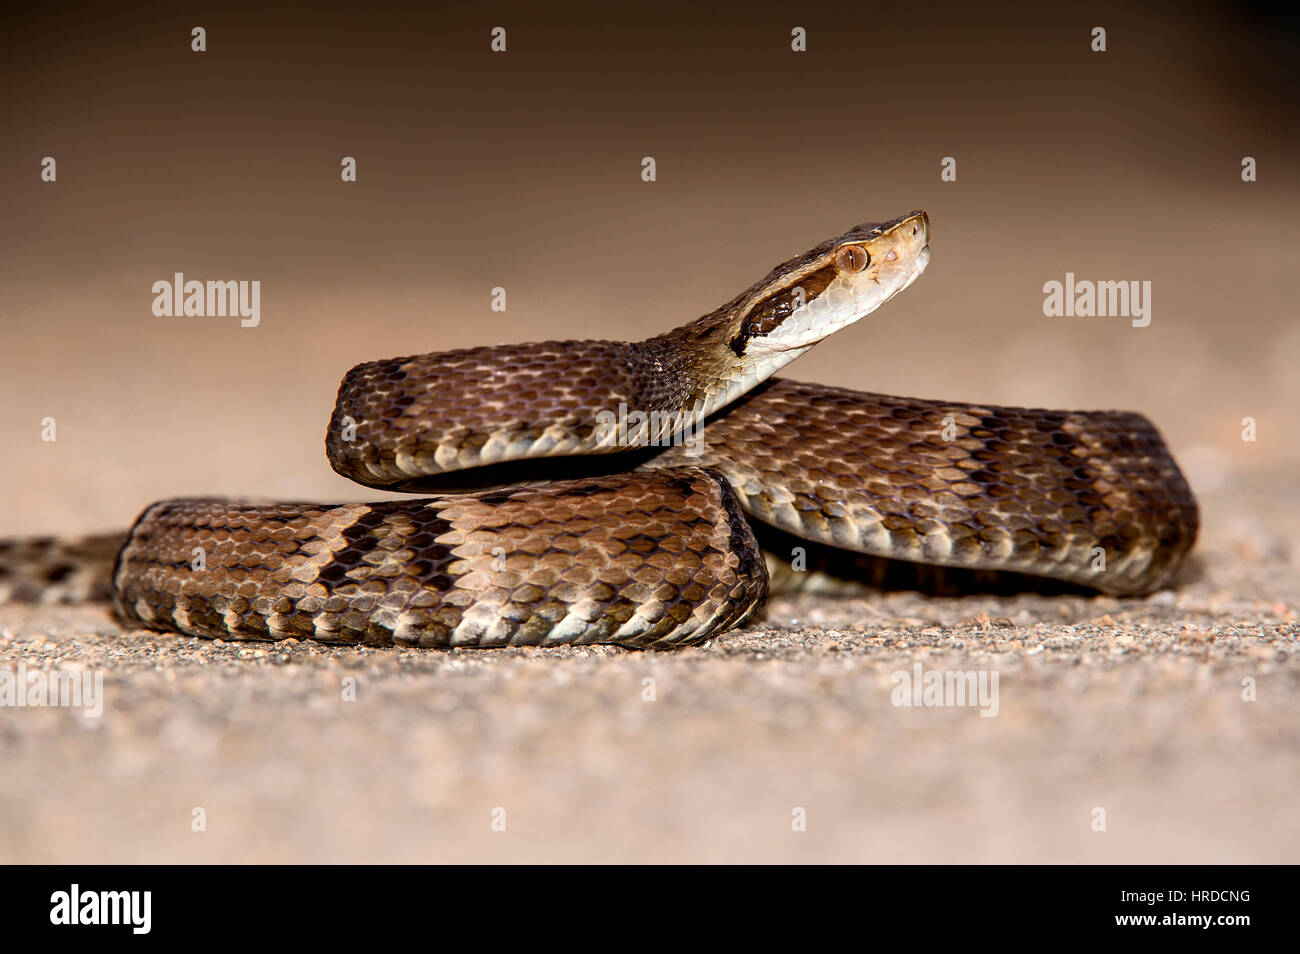 Jararaca (Bothrops jararaca) poisoning snake, photographed in Cariacica, Espírito Santo - Brazil. Atlantic forest Biome. Wild animal. Stock Photo